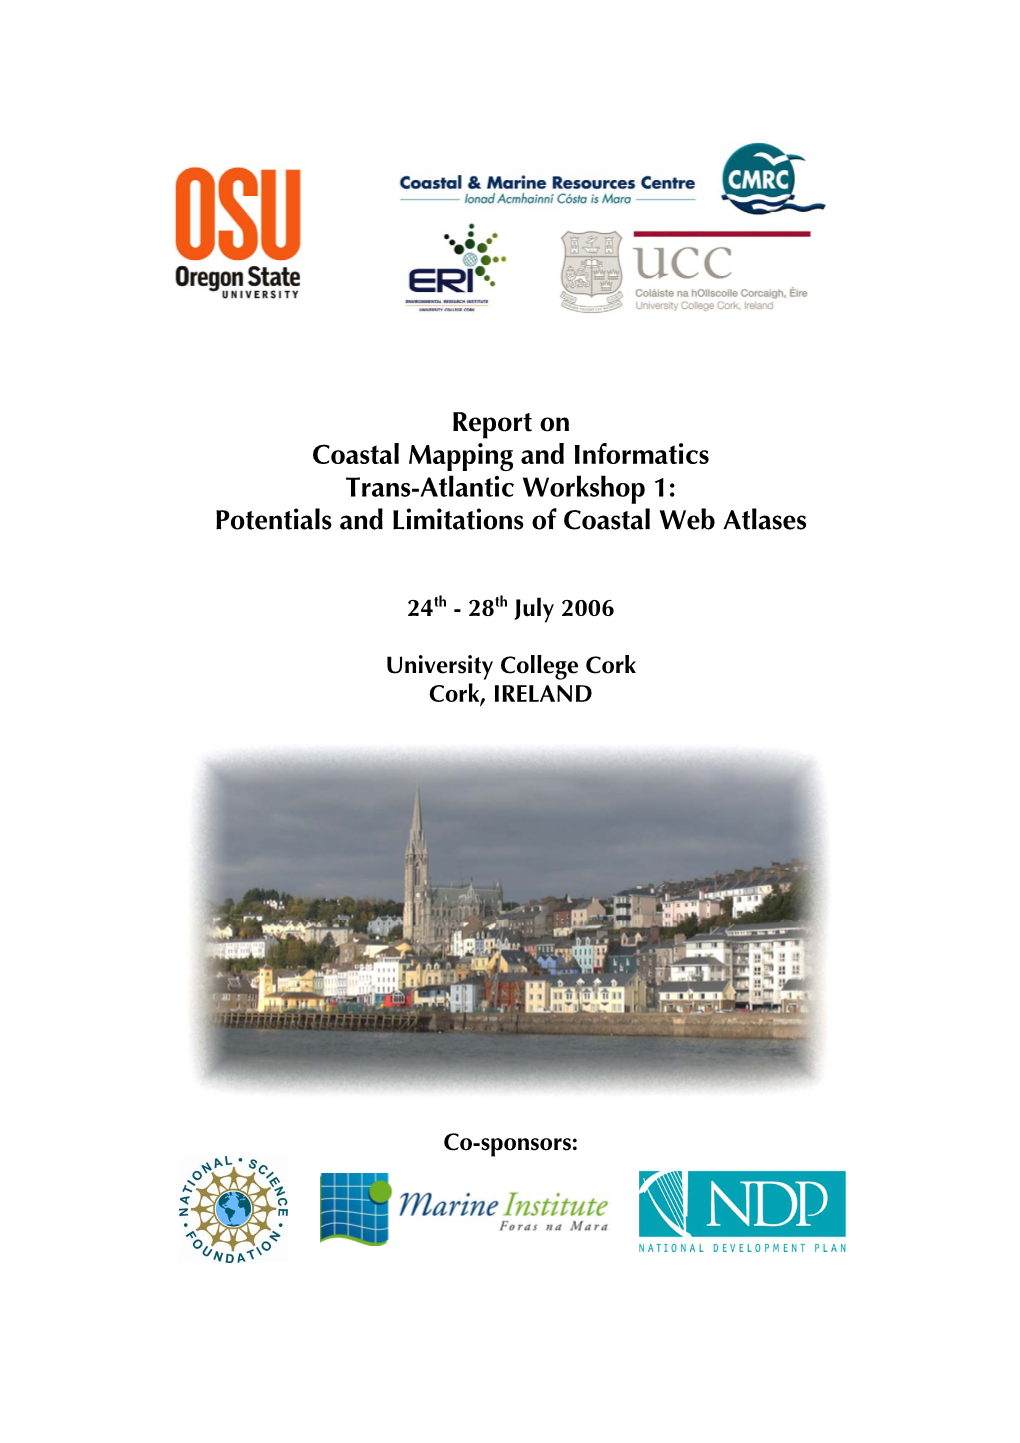 Report on Coastal Mapping and Informatics Trans-Atlantic Workshop 1: Potentials and Limitations of Coastal Web Atlases